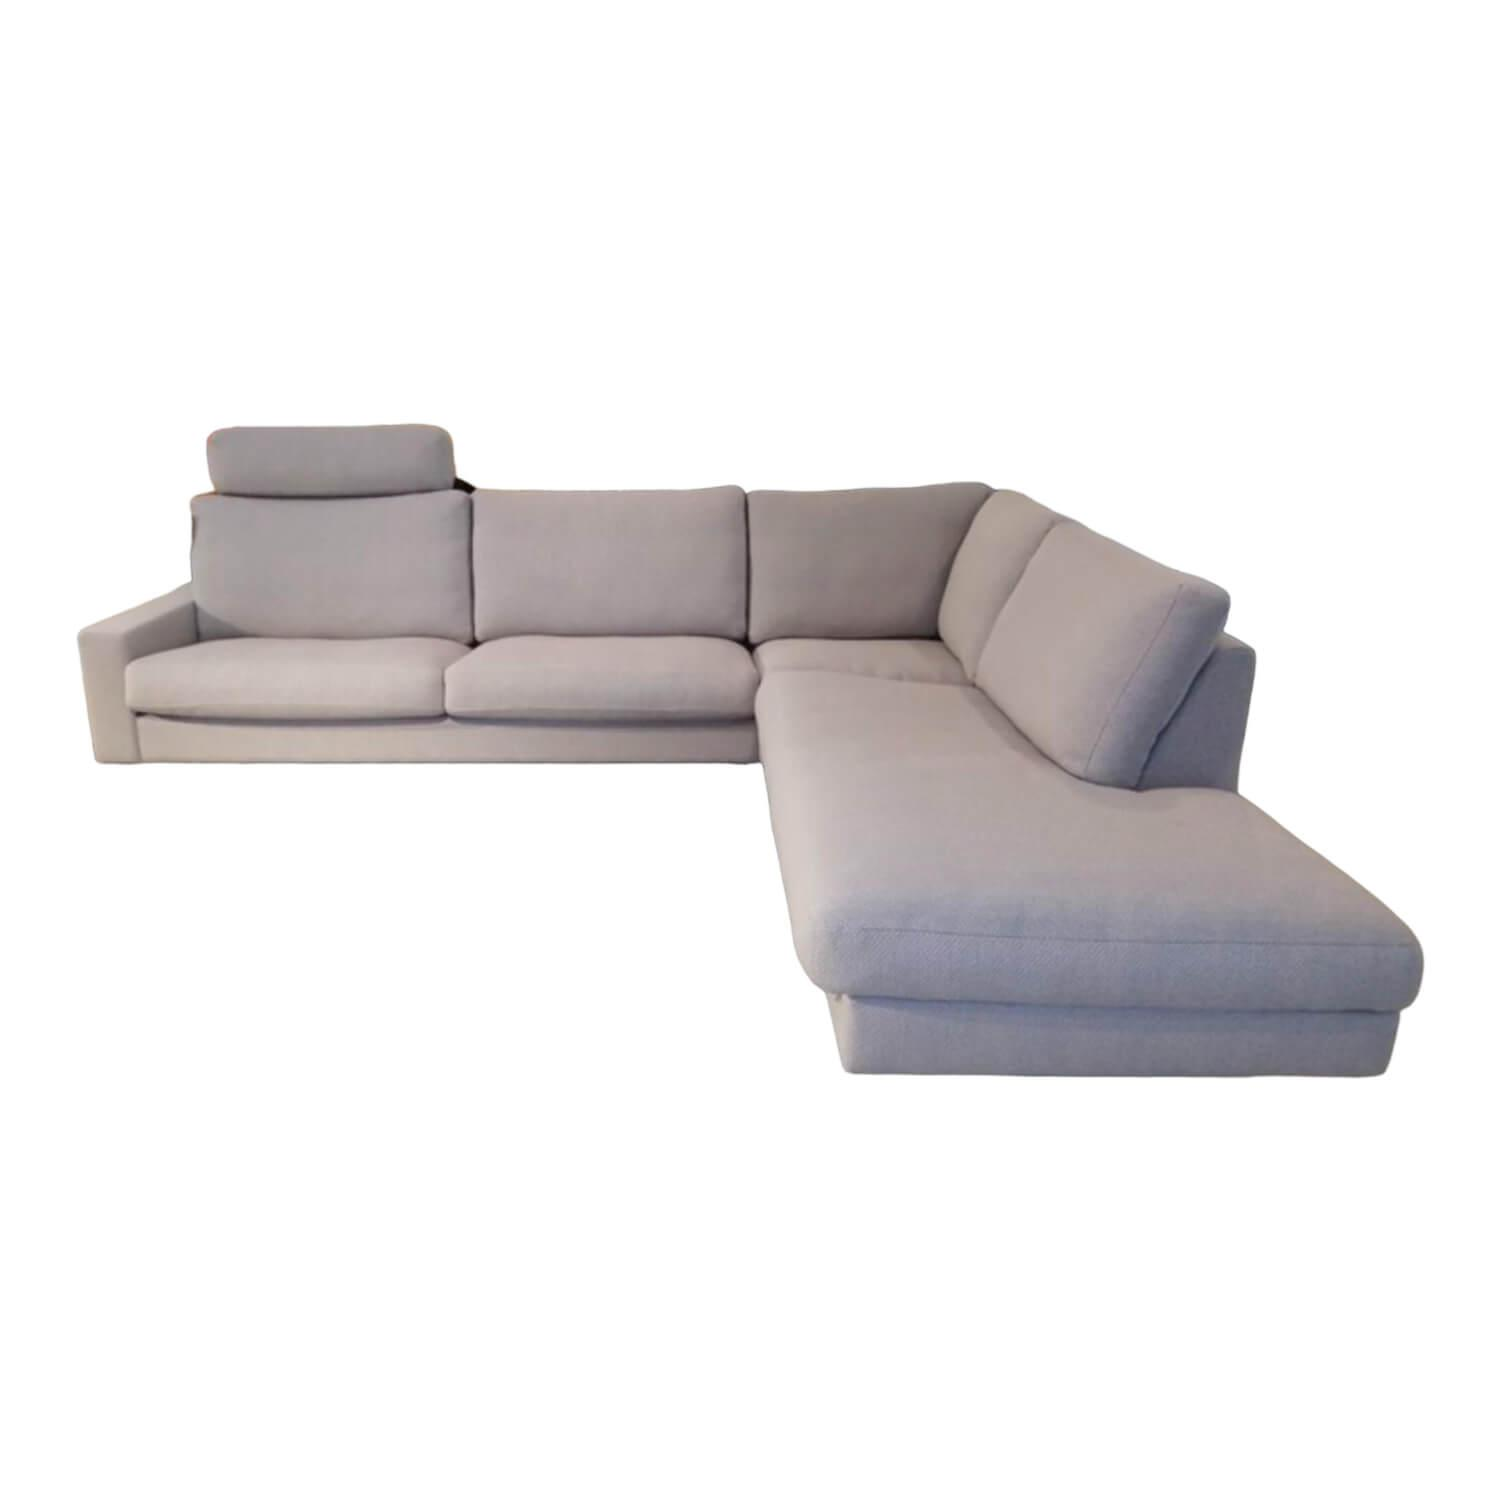 Sofa CL 500 Bezug Stoff Kust Grau 2016.98 Metallkufe Chrom Glänzend